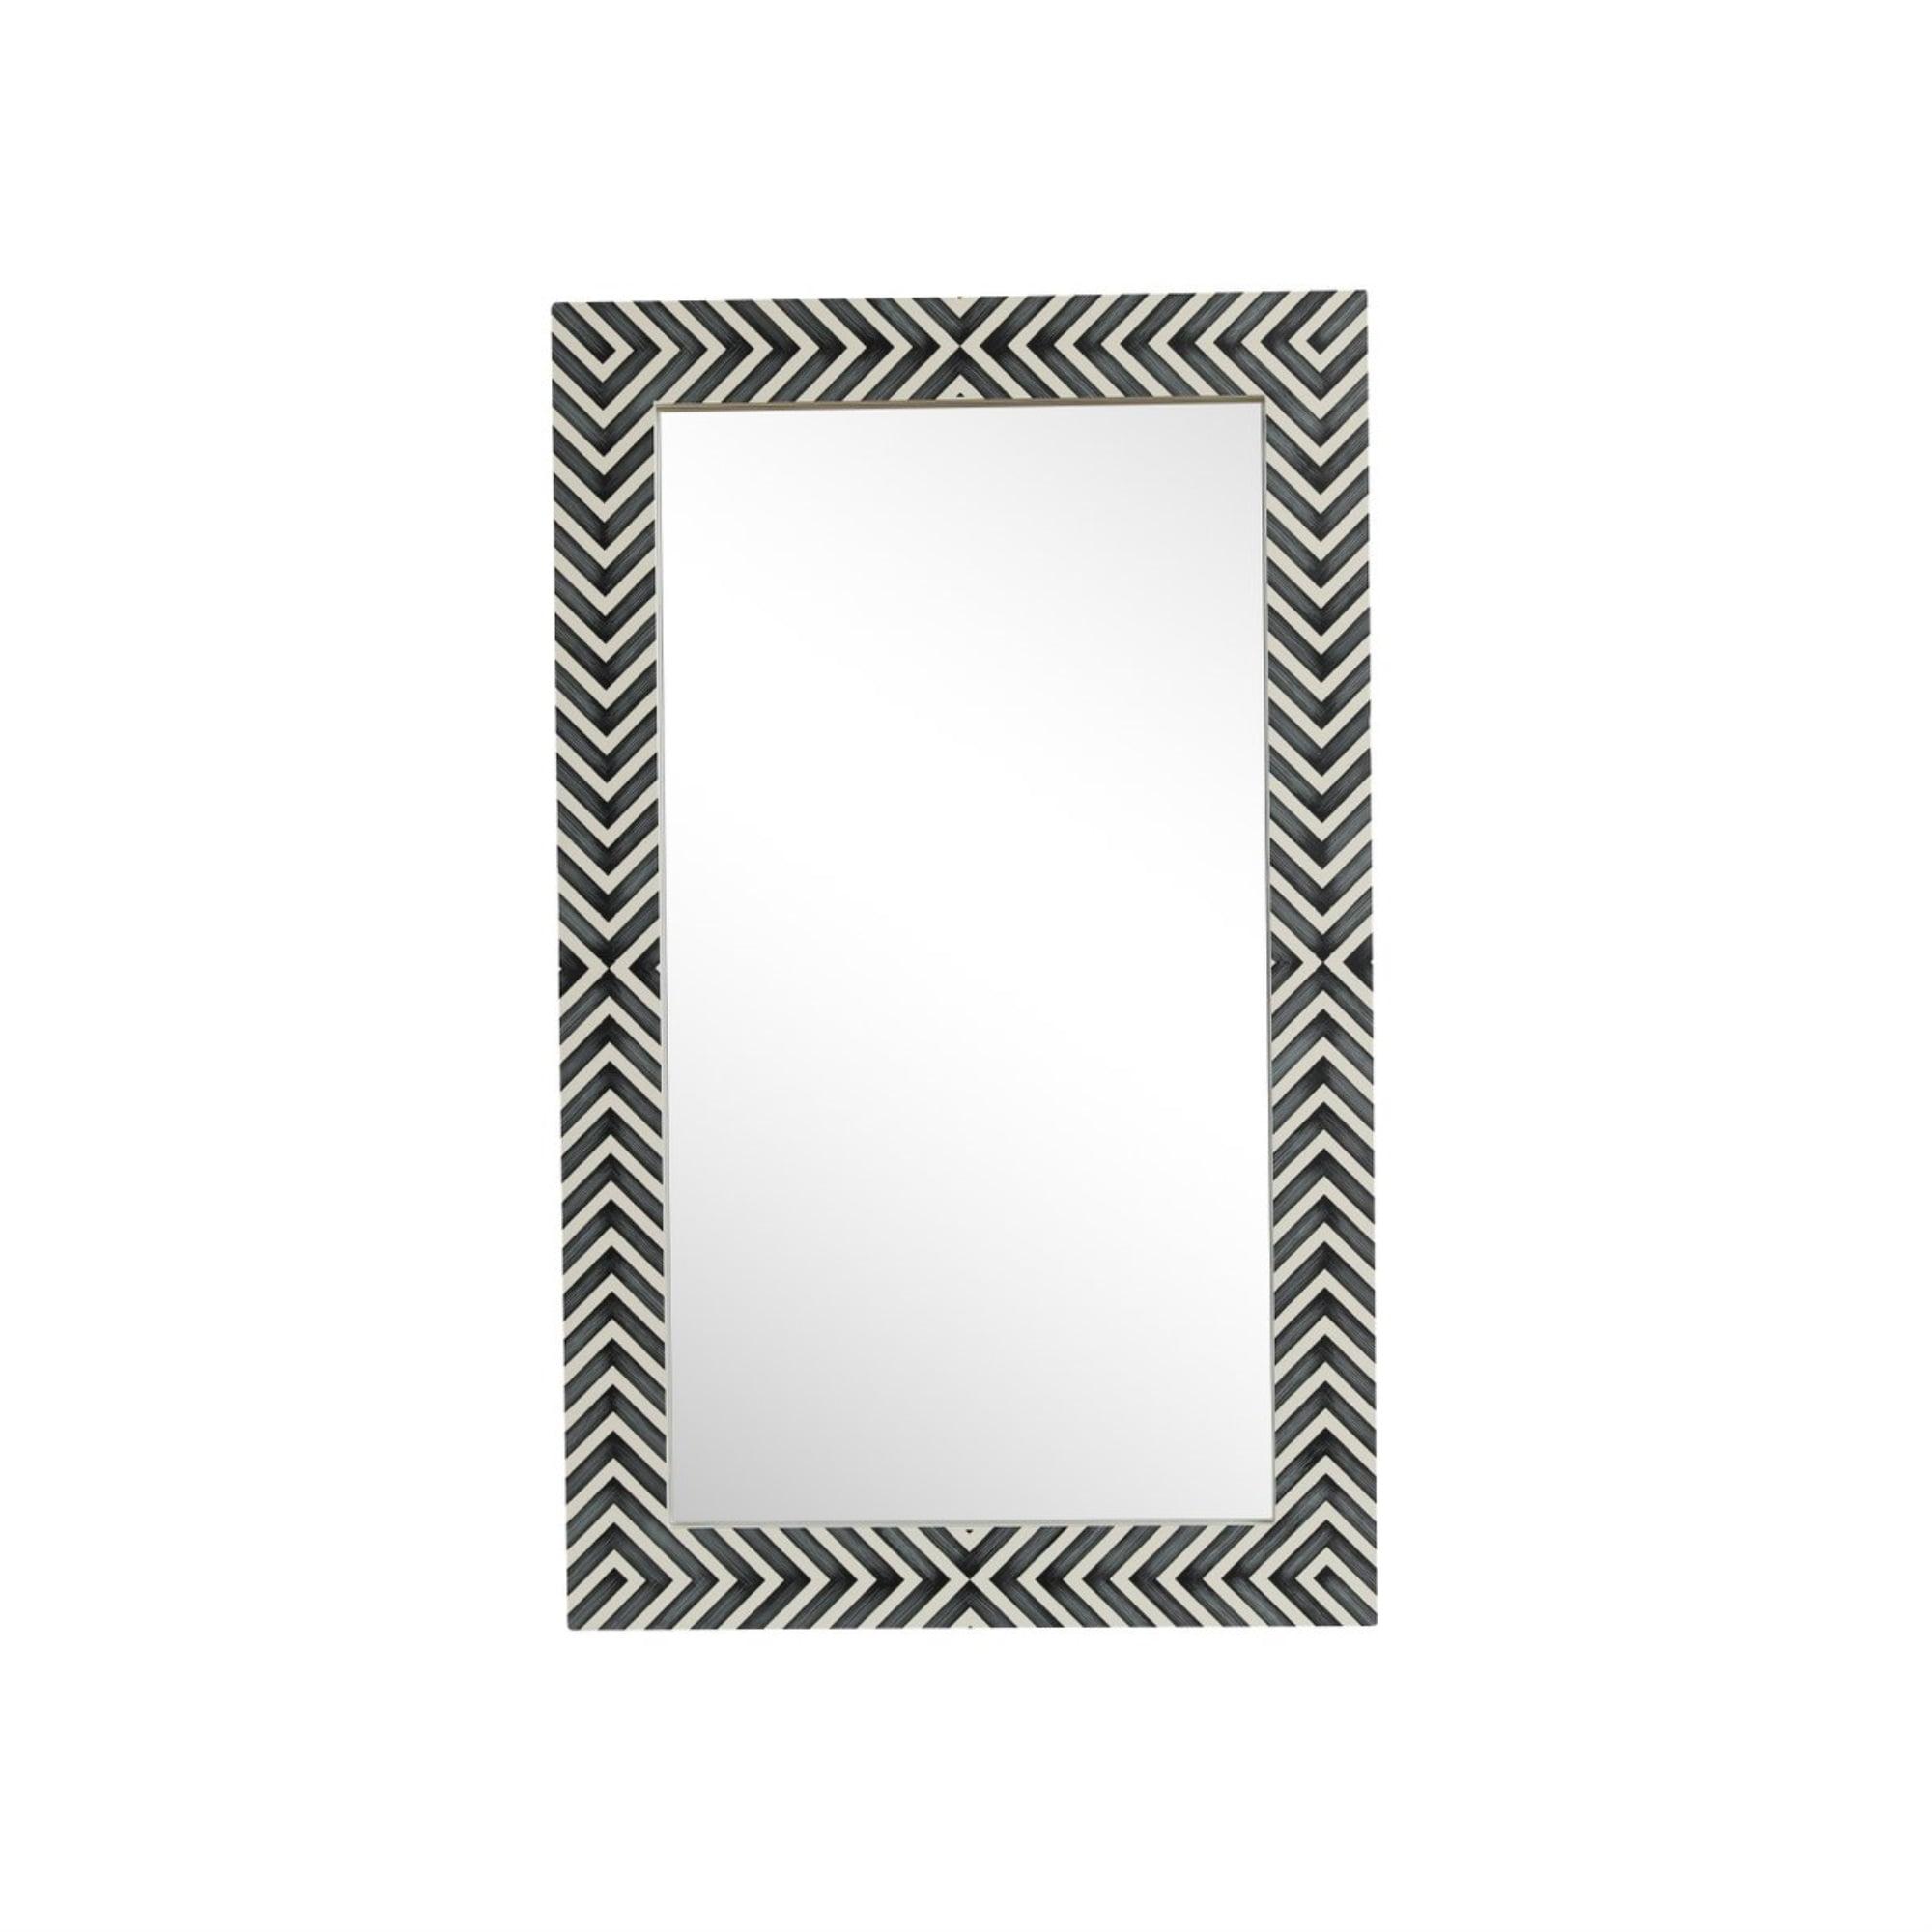 Casual Chic 36"x22" Black Chevron Striped Rectangular Wood Mirror